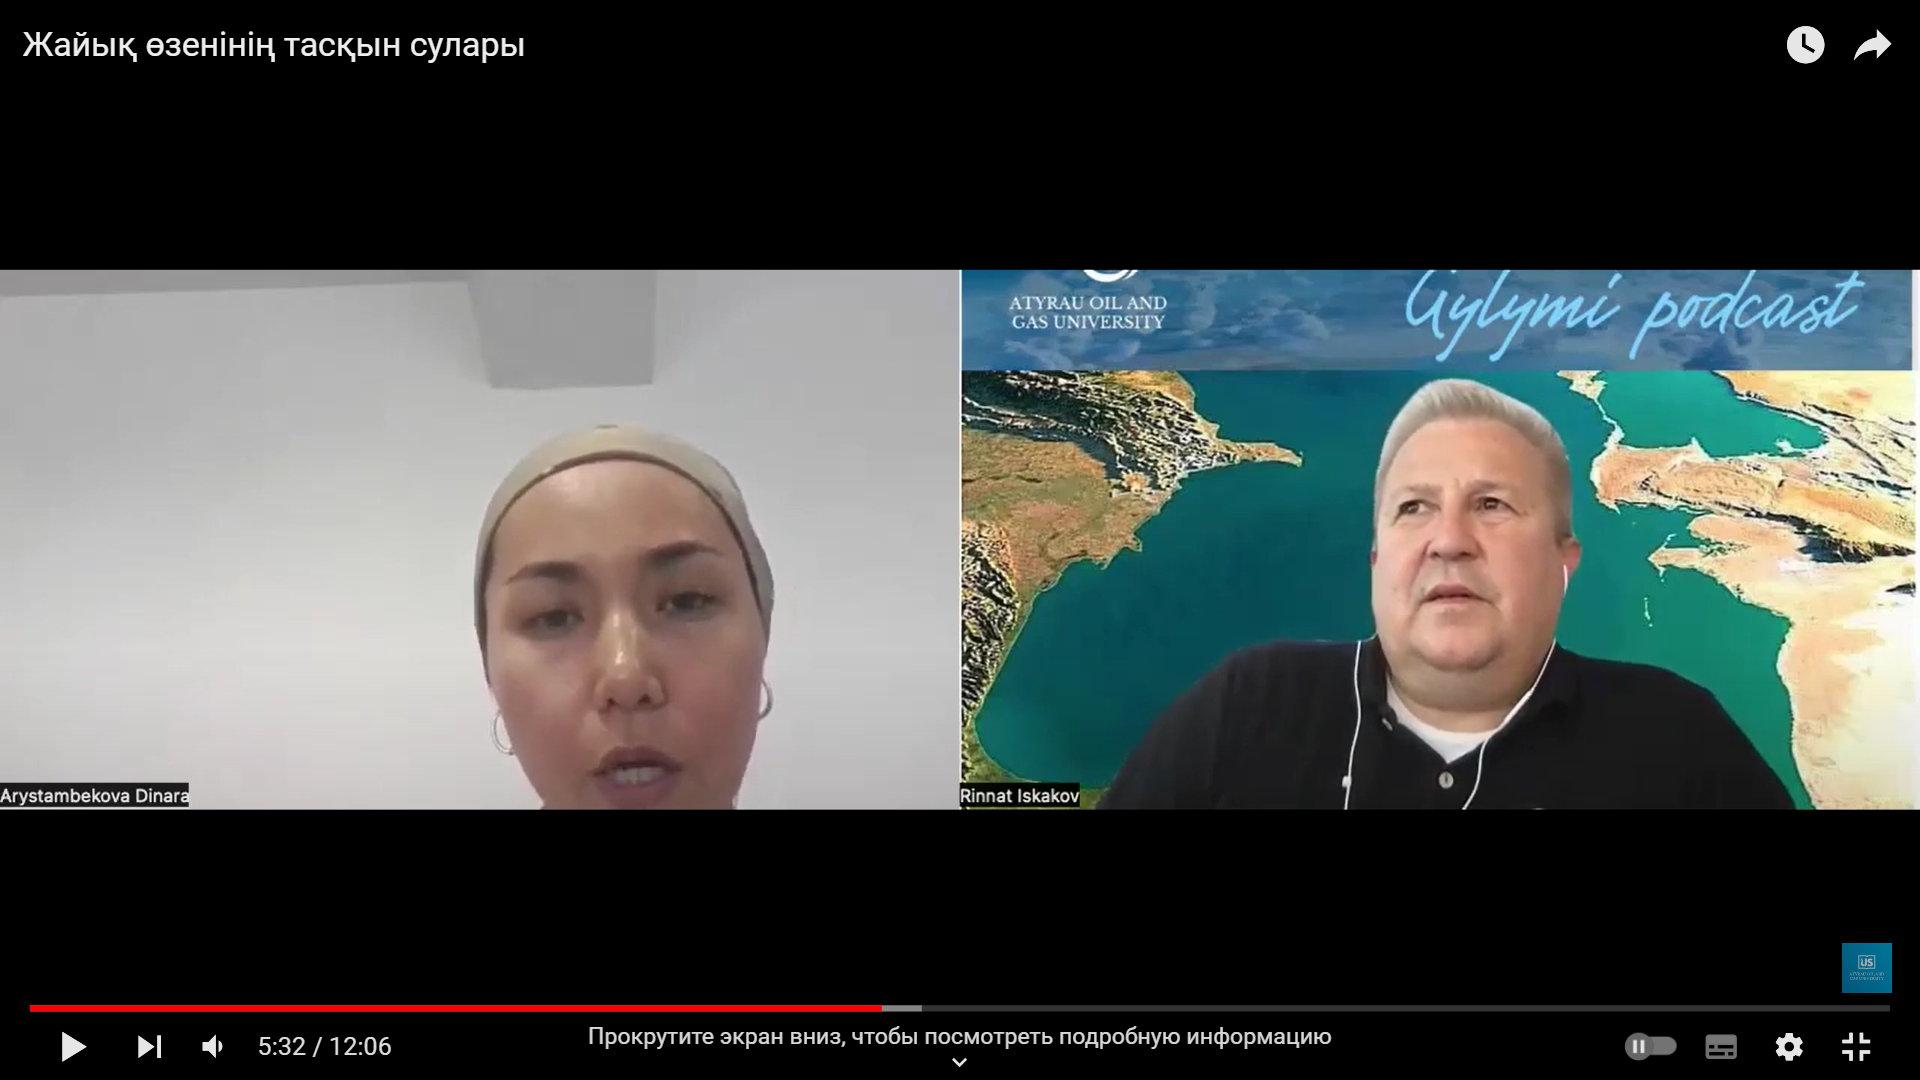 Arystambekova D.D in the podcast “25 minutes below the Caspian Sea”